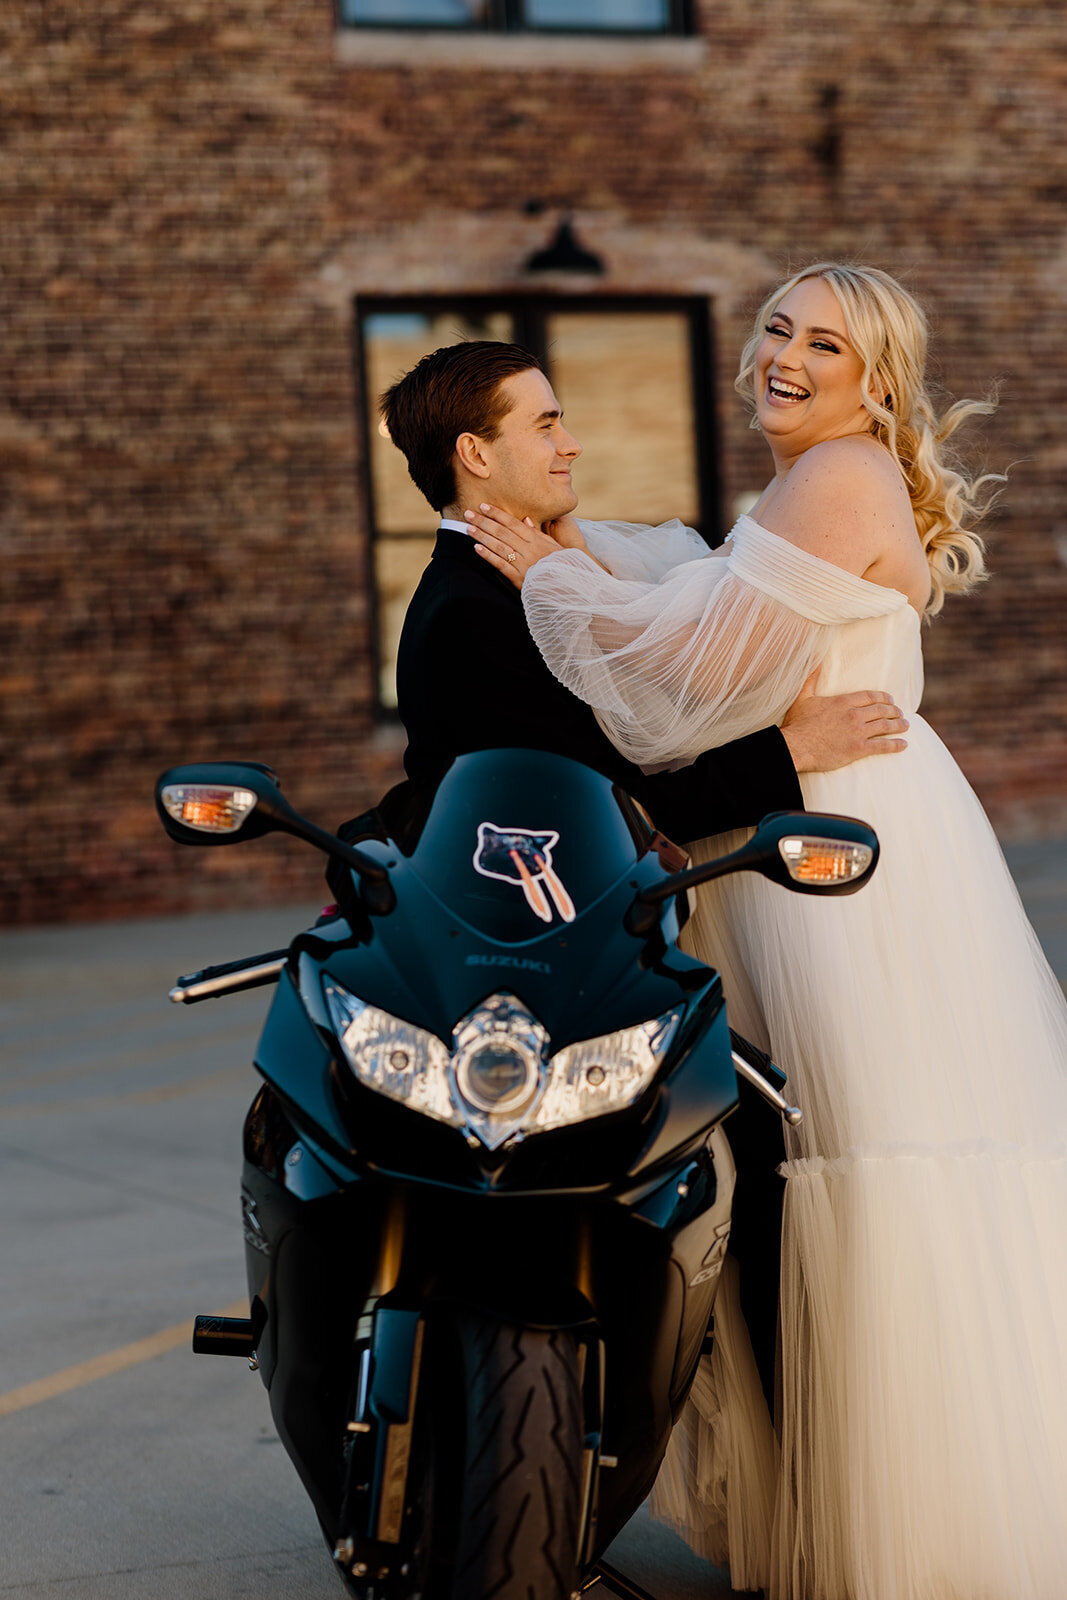 Chicago-comapny251-wedding-motorcycle-1